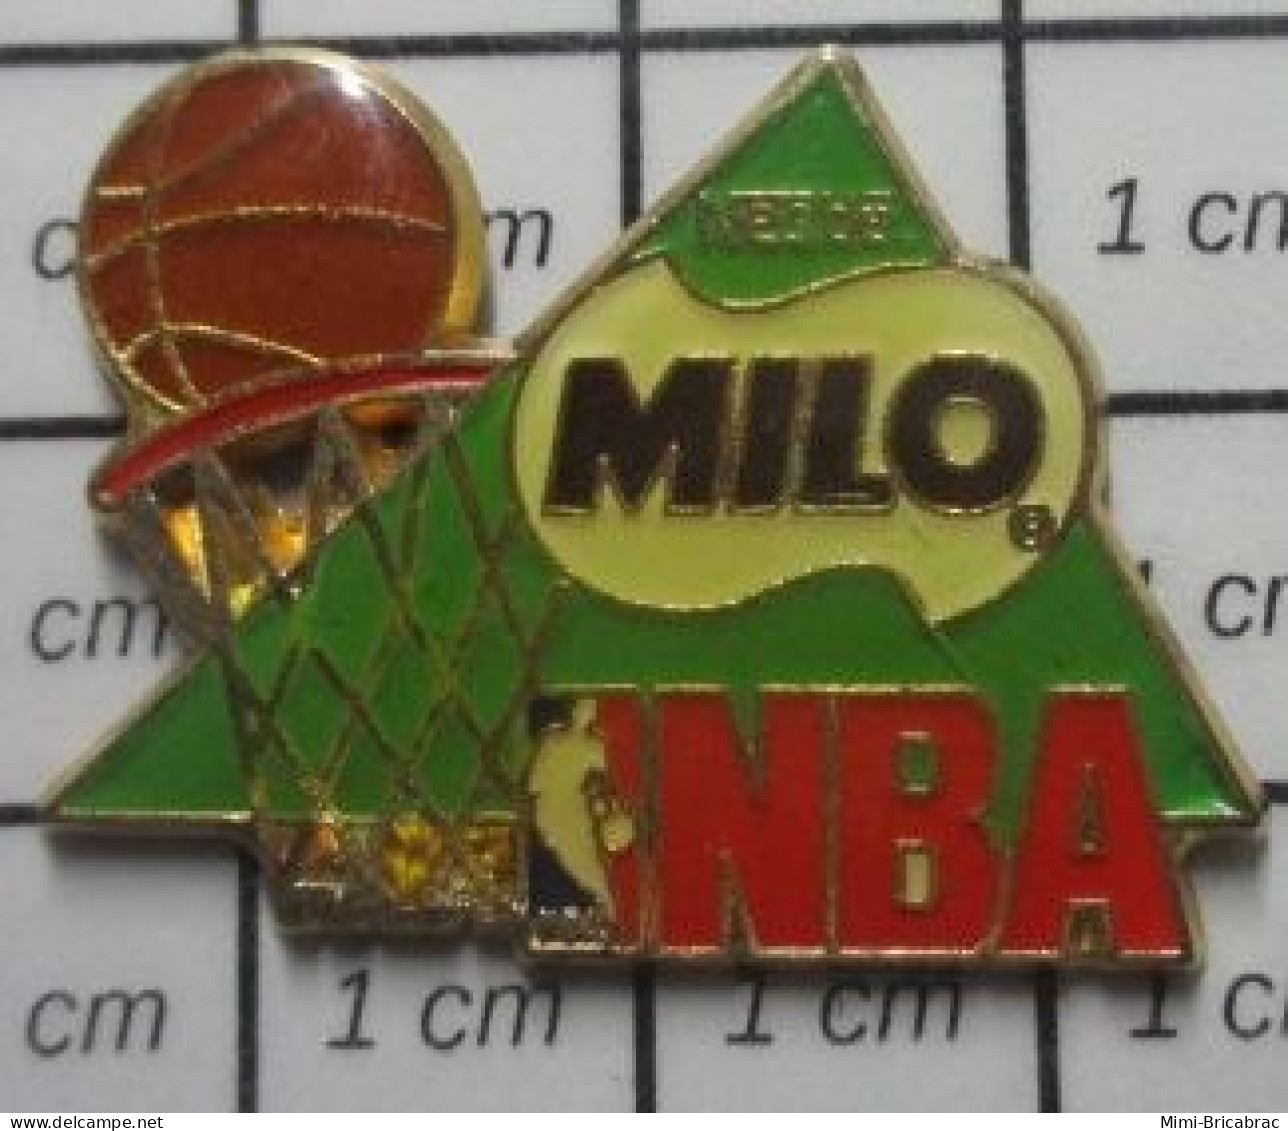 2020  Pin's Pins / Beau Et Rare / THEME : SPORTS / BASKET-BALL USA NBA GLACE MILO Sans Tintin ! - Basketbal